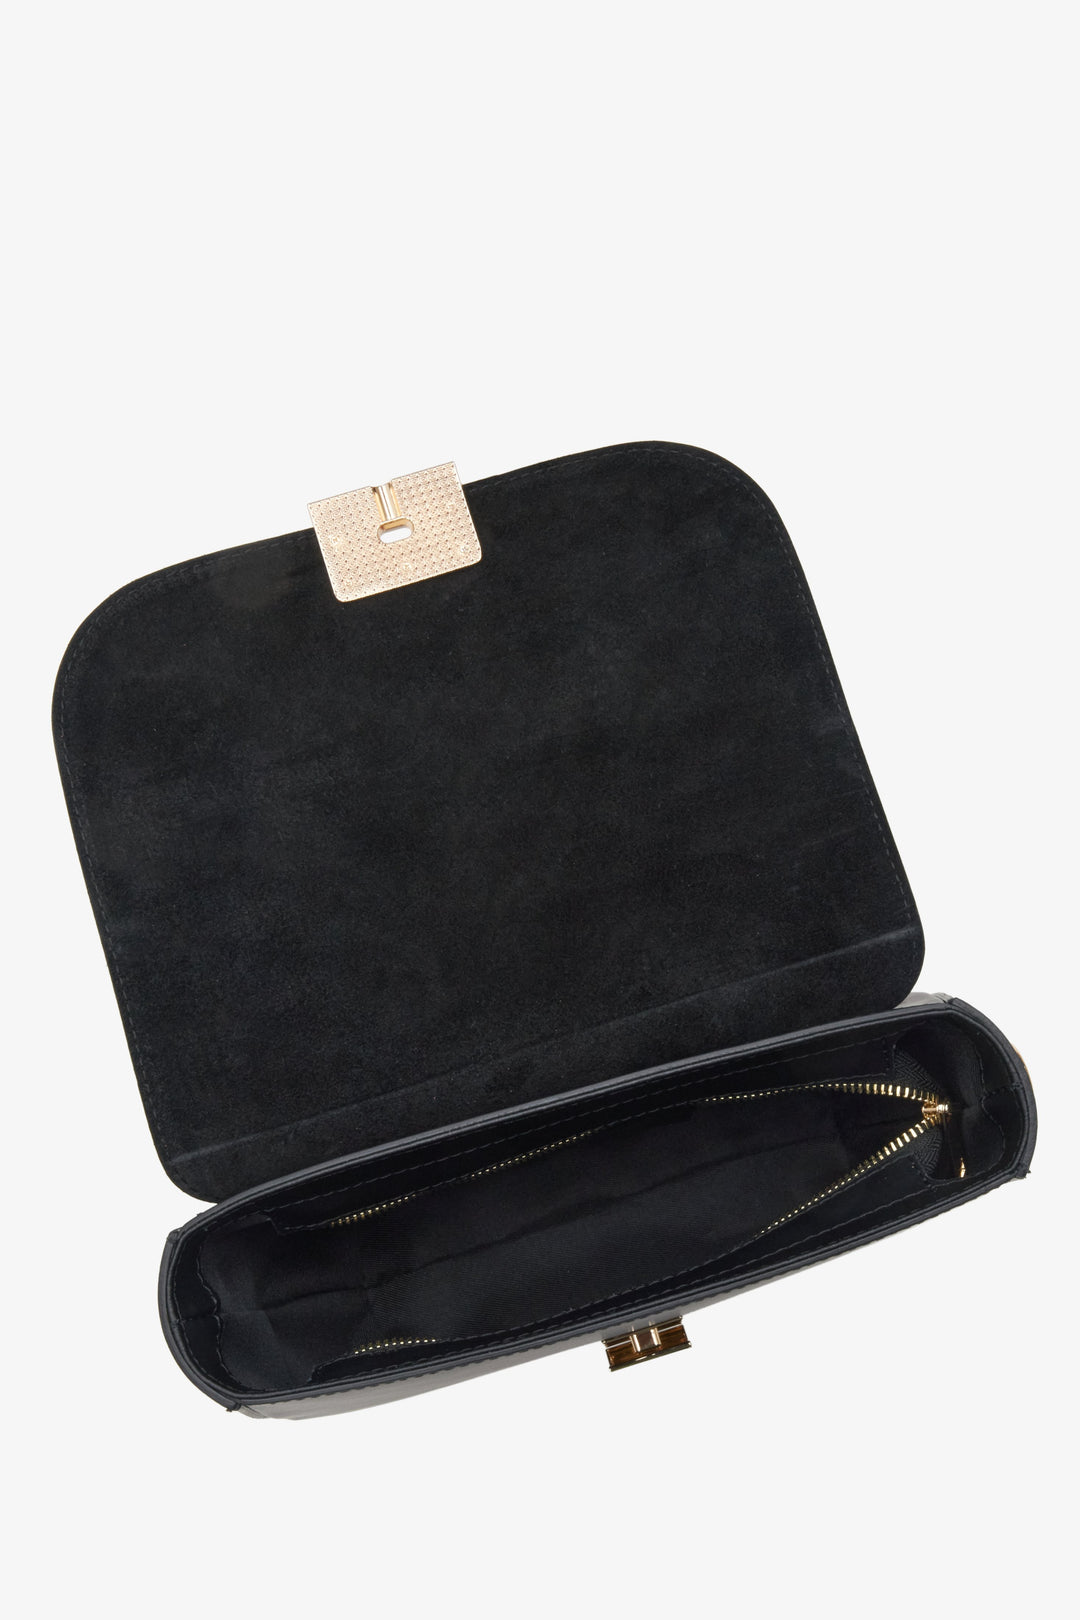 Estro black  crescent-shaped handbag made of Italian genuine leather - close-up on the interior of the model.